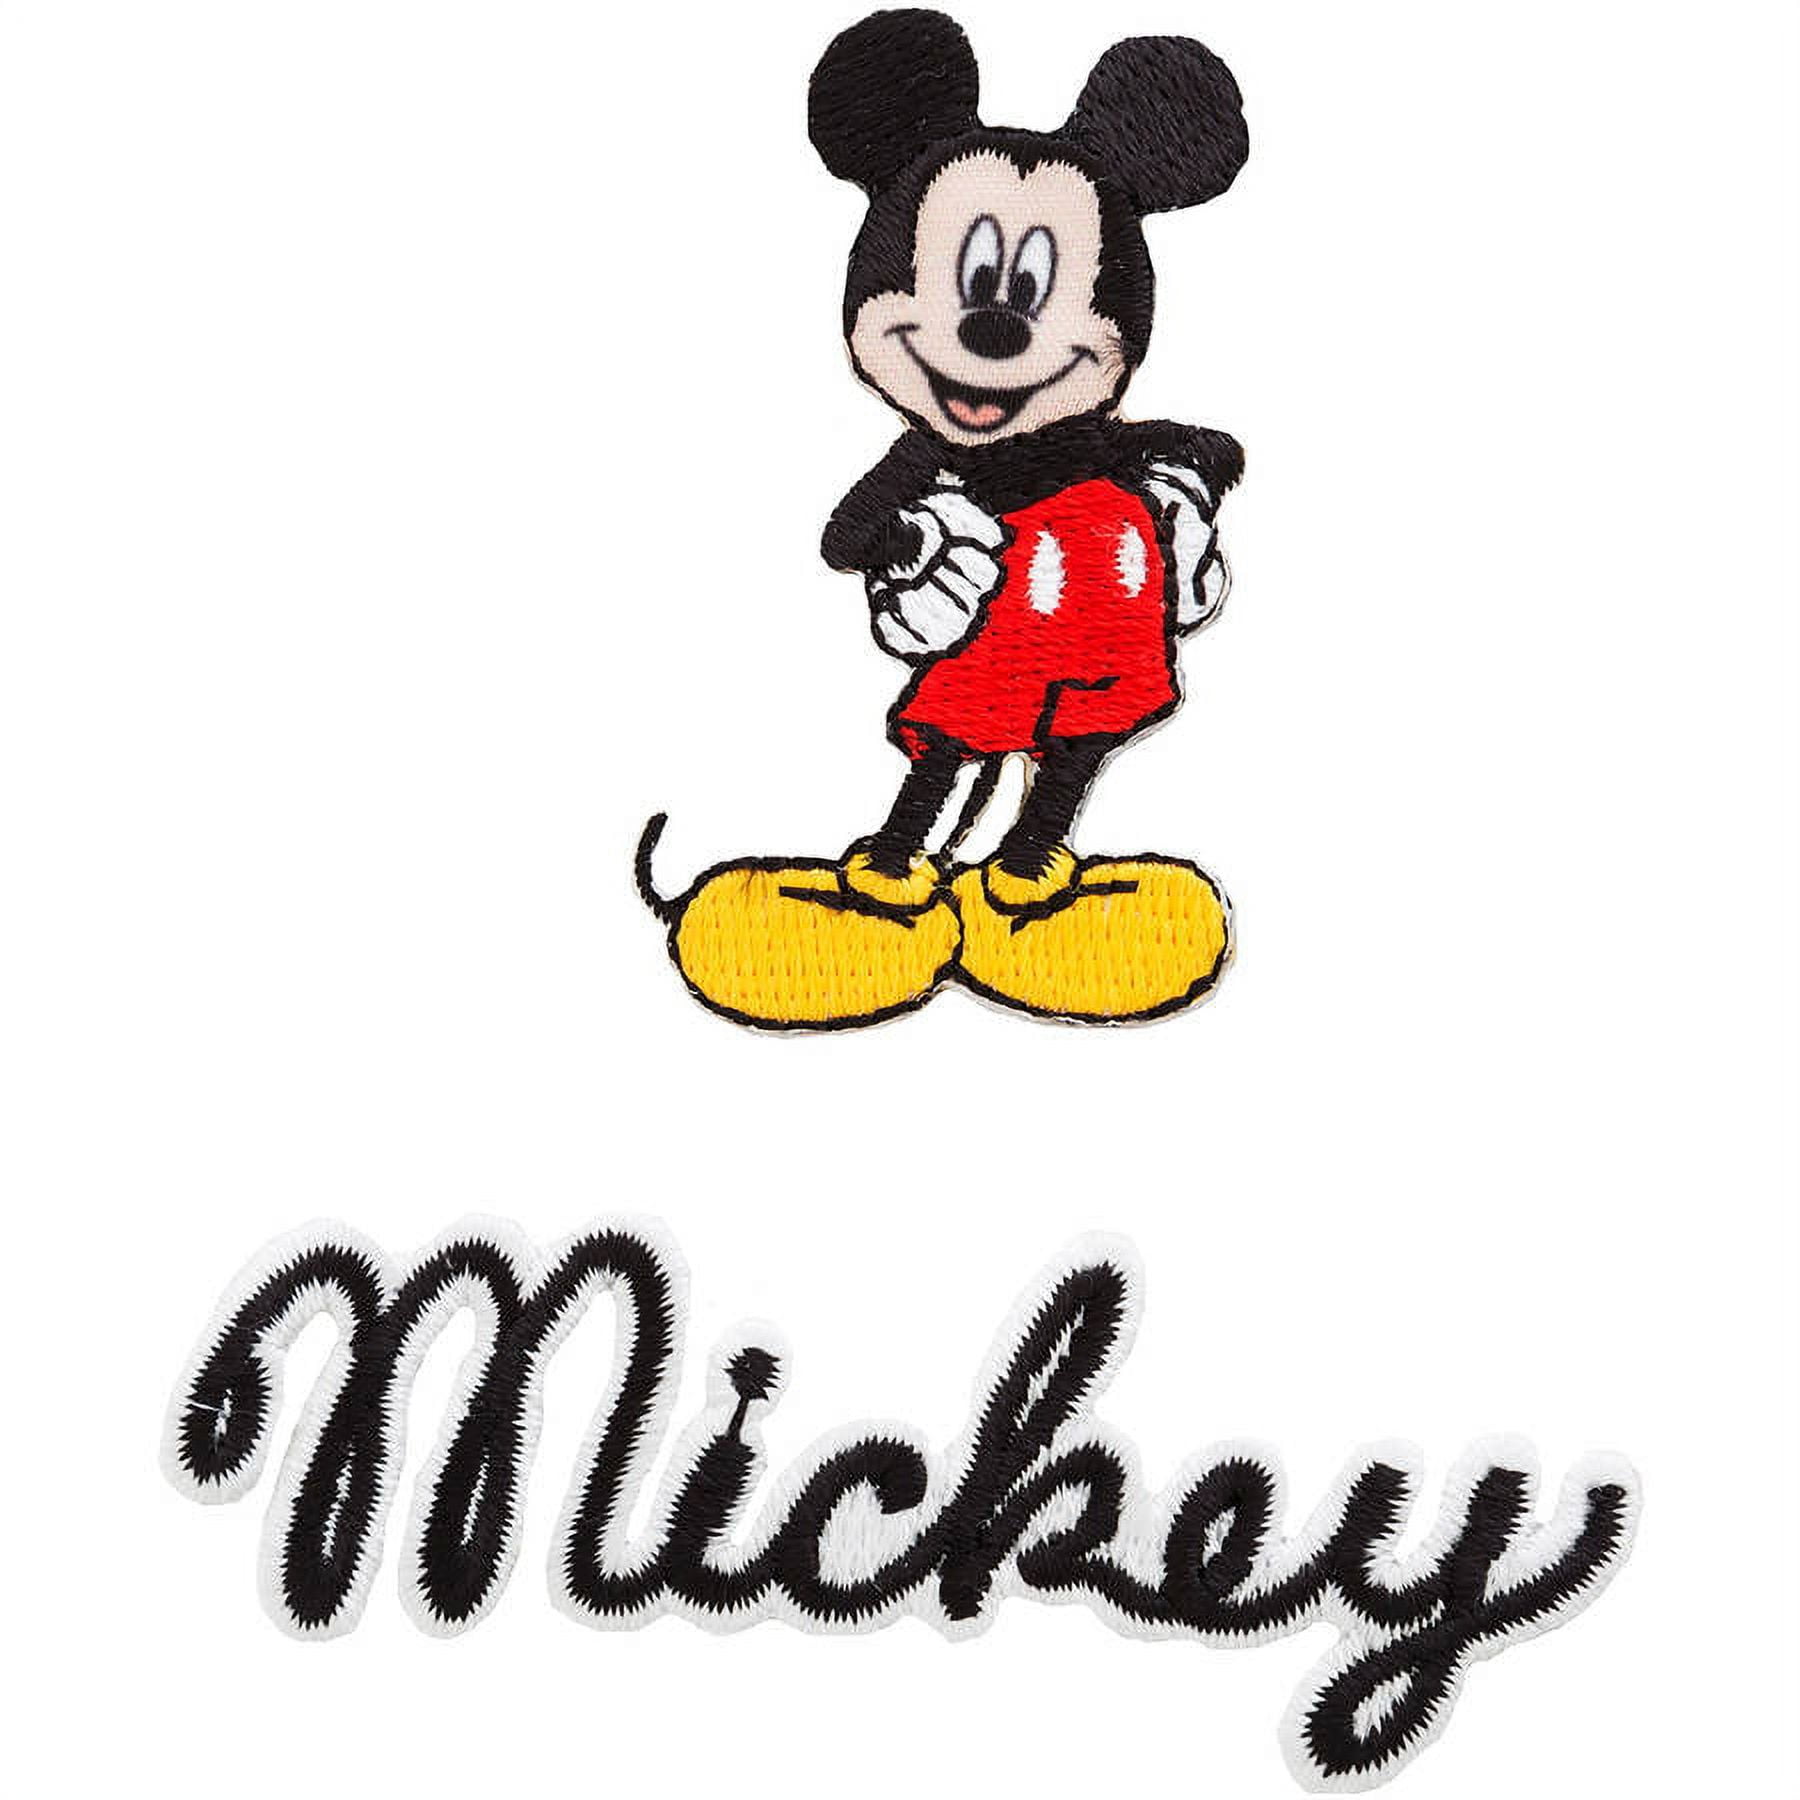 Simplicity Applique Disney Iron on SM Minnie Mouse